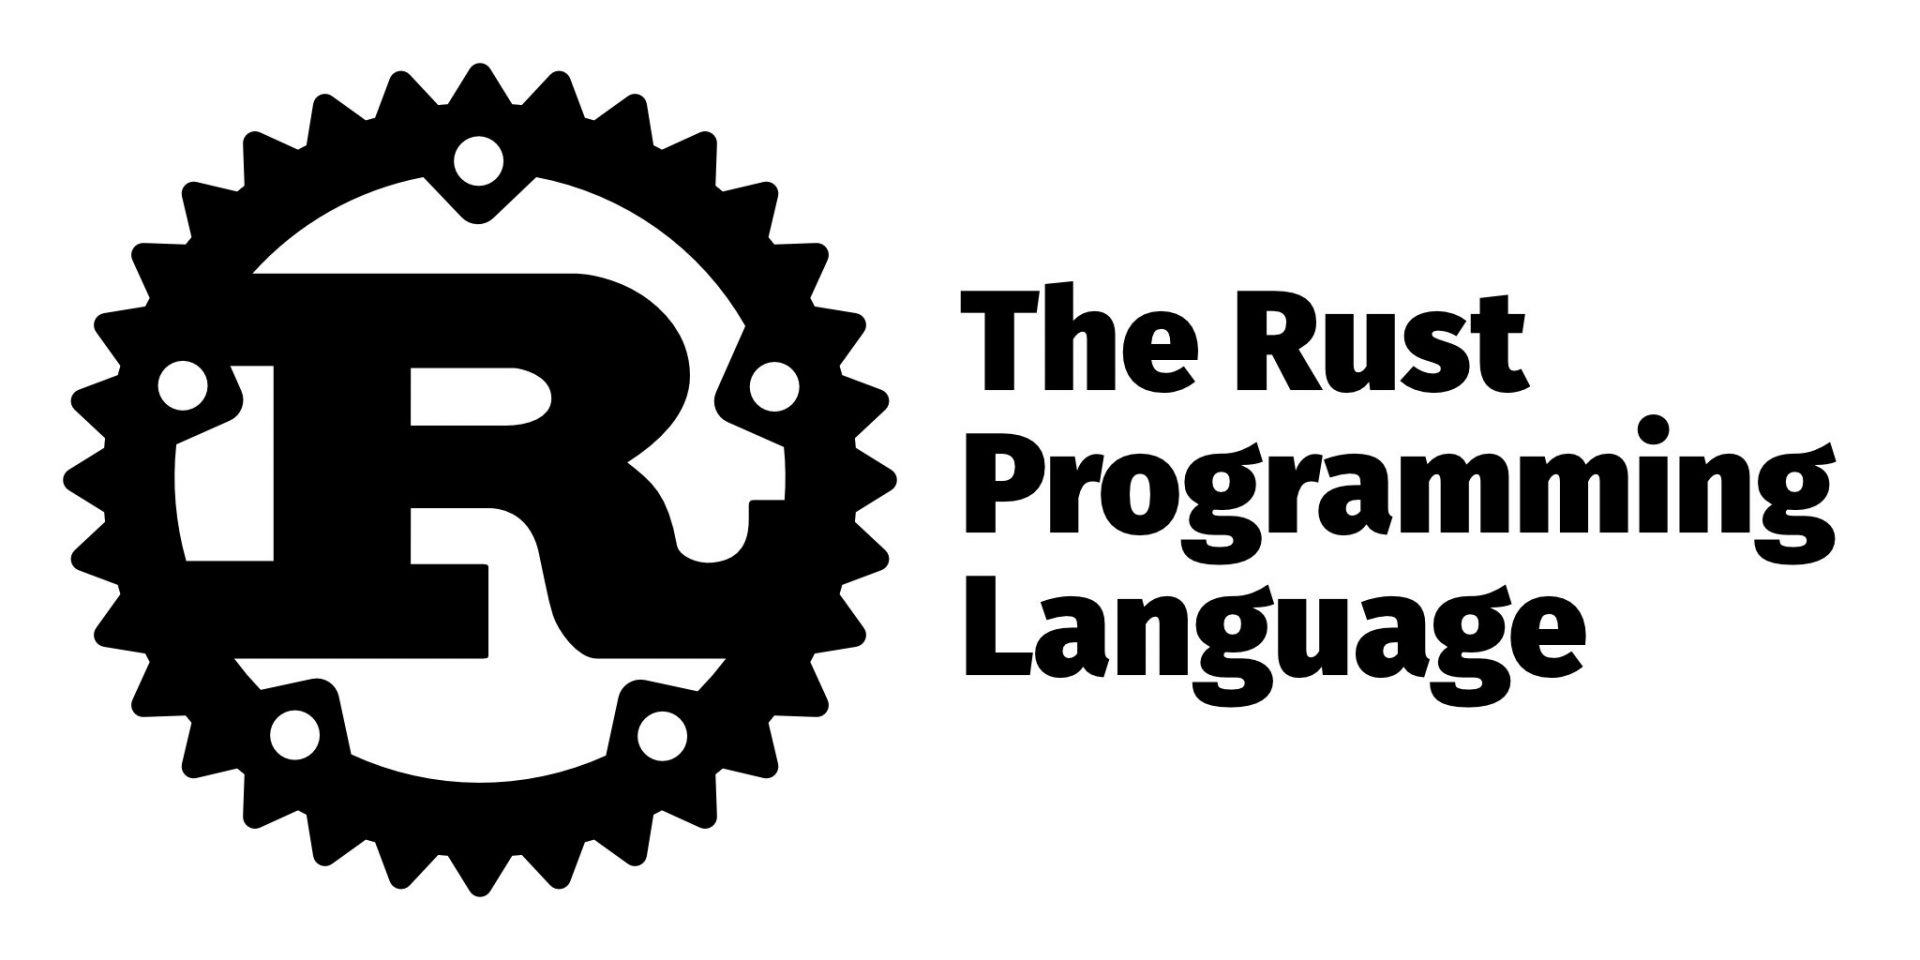 Rust programming